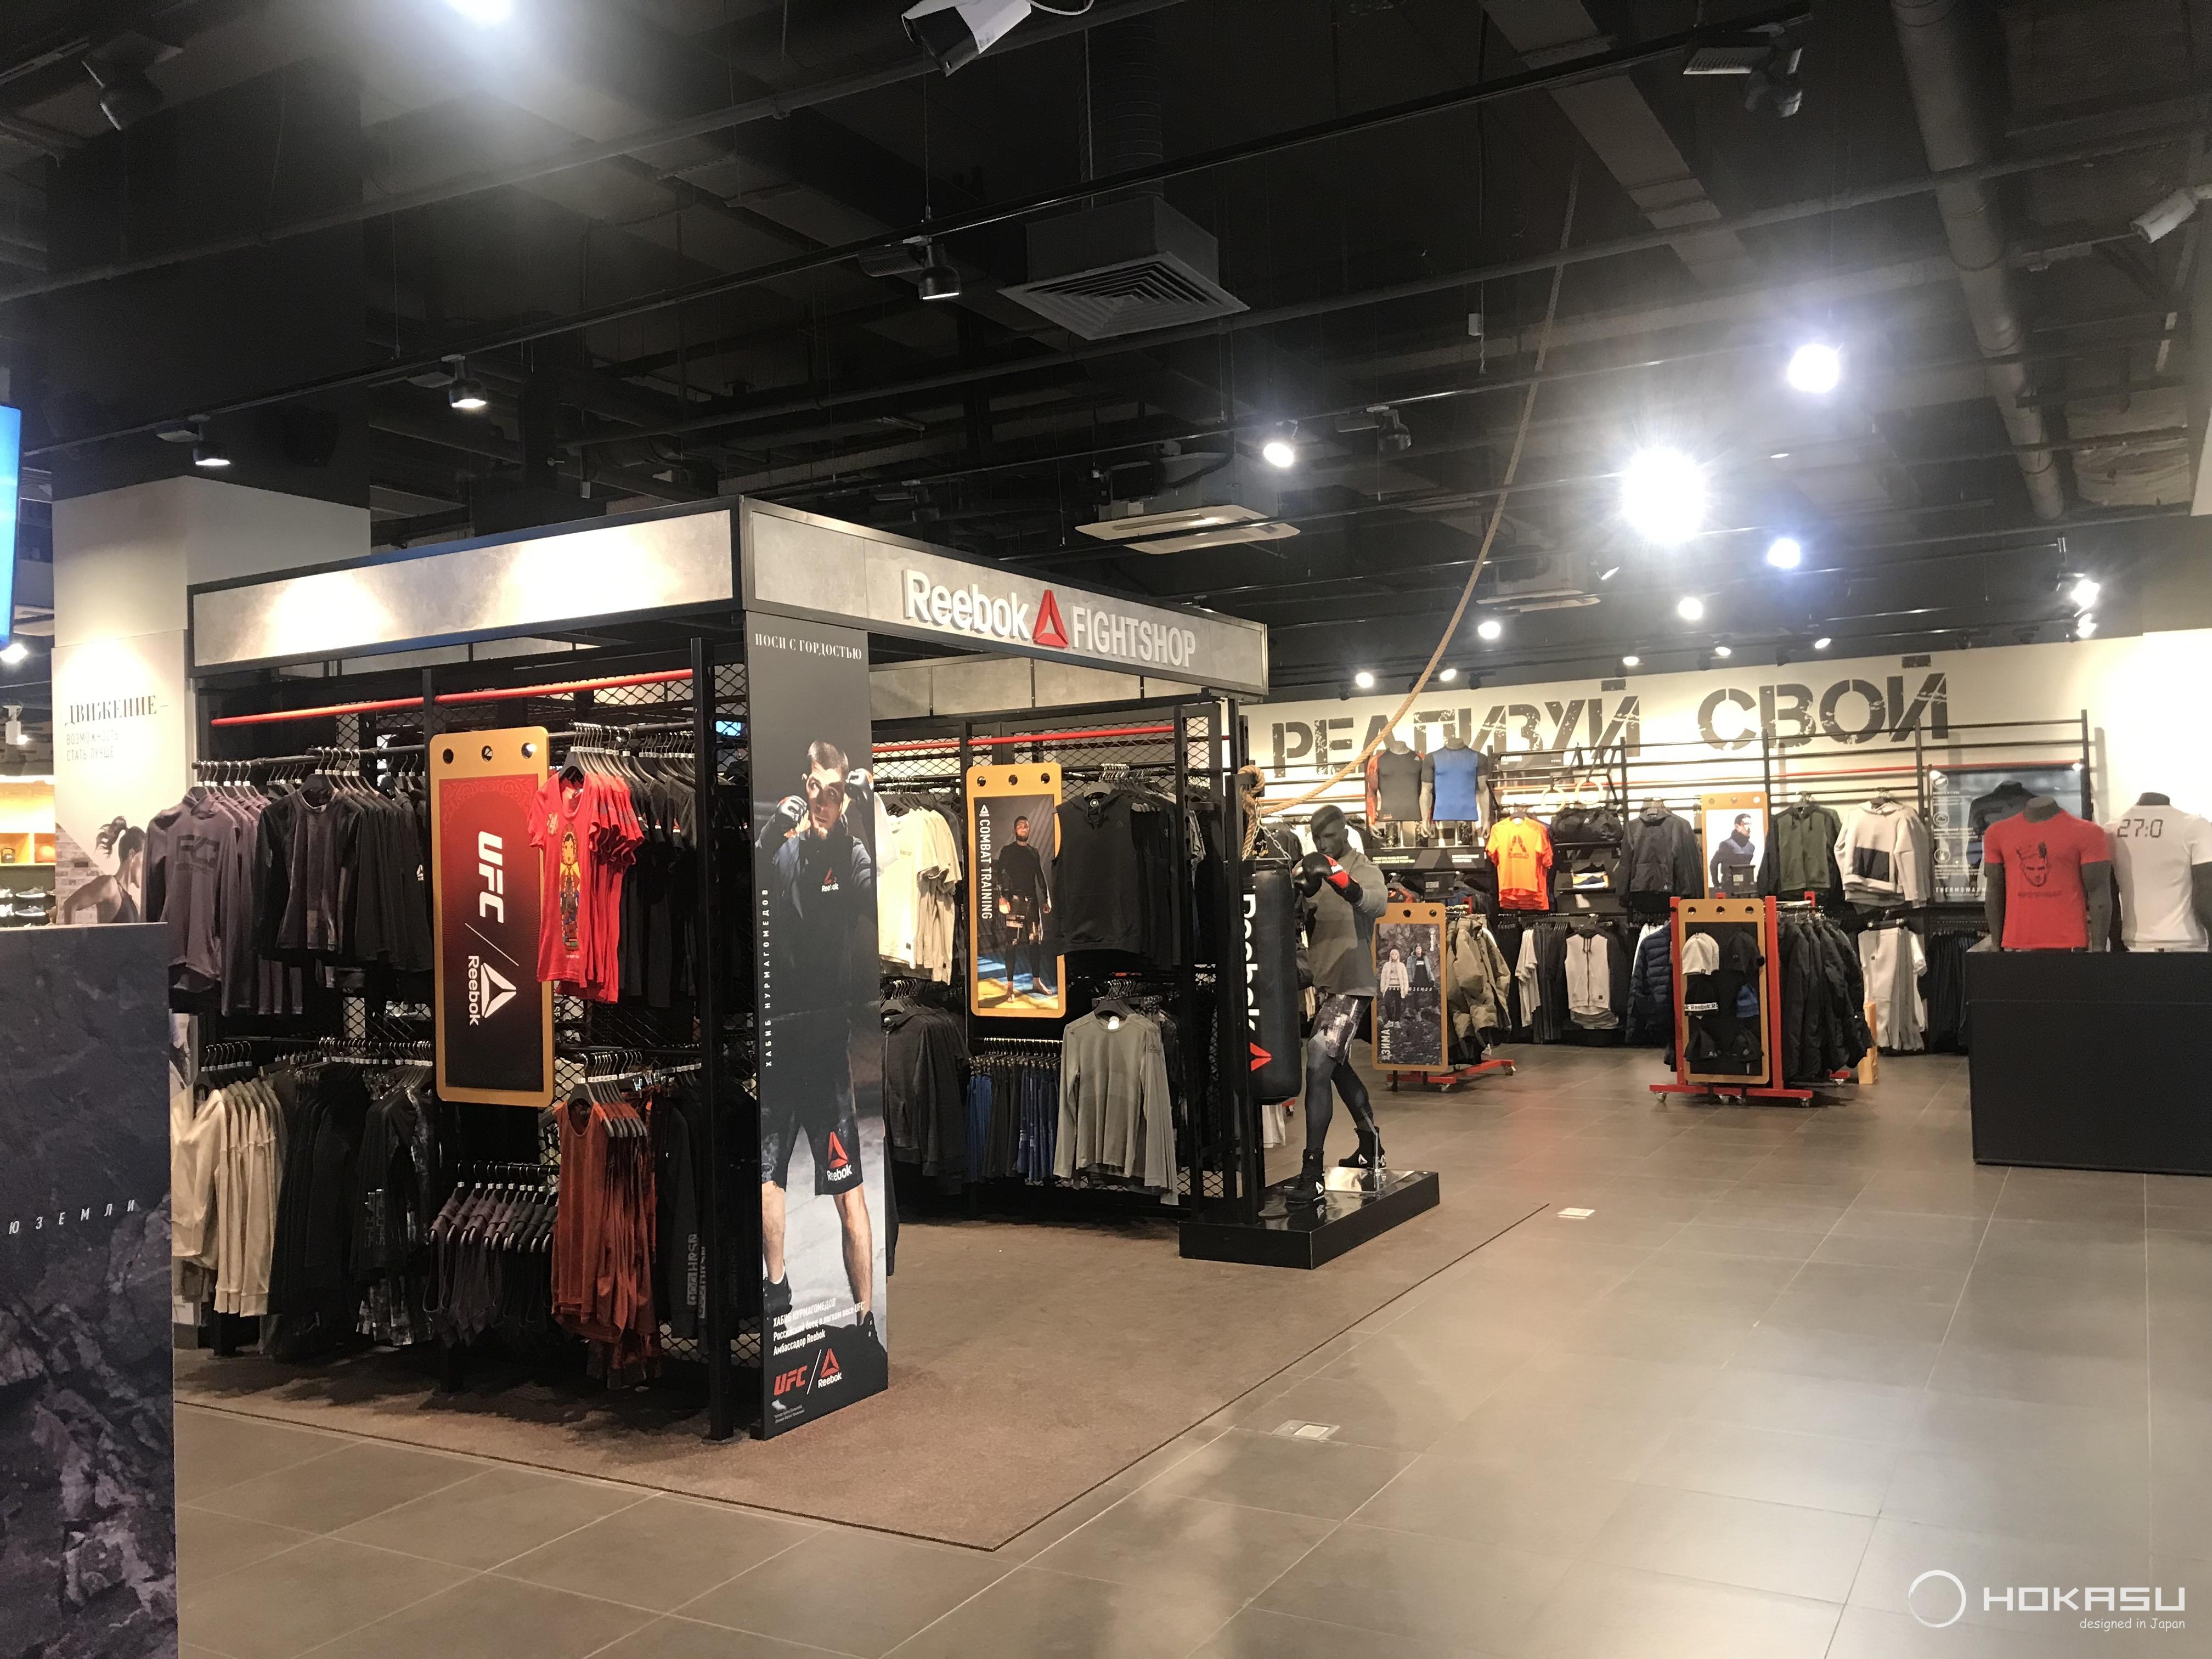 Reebok brand store in the Metropolis shopping mall – HOKASU